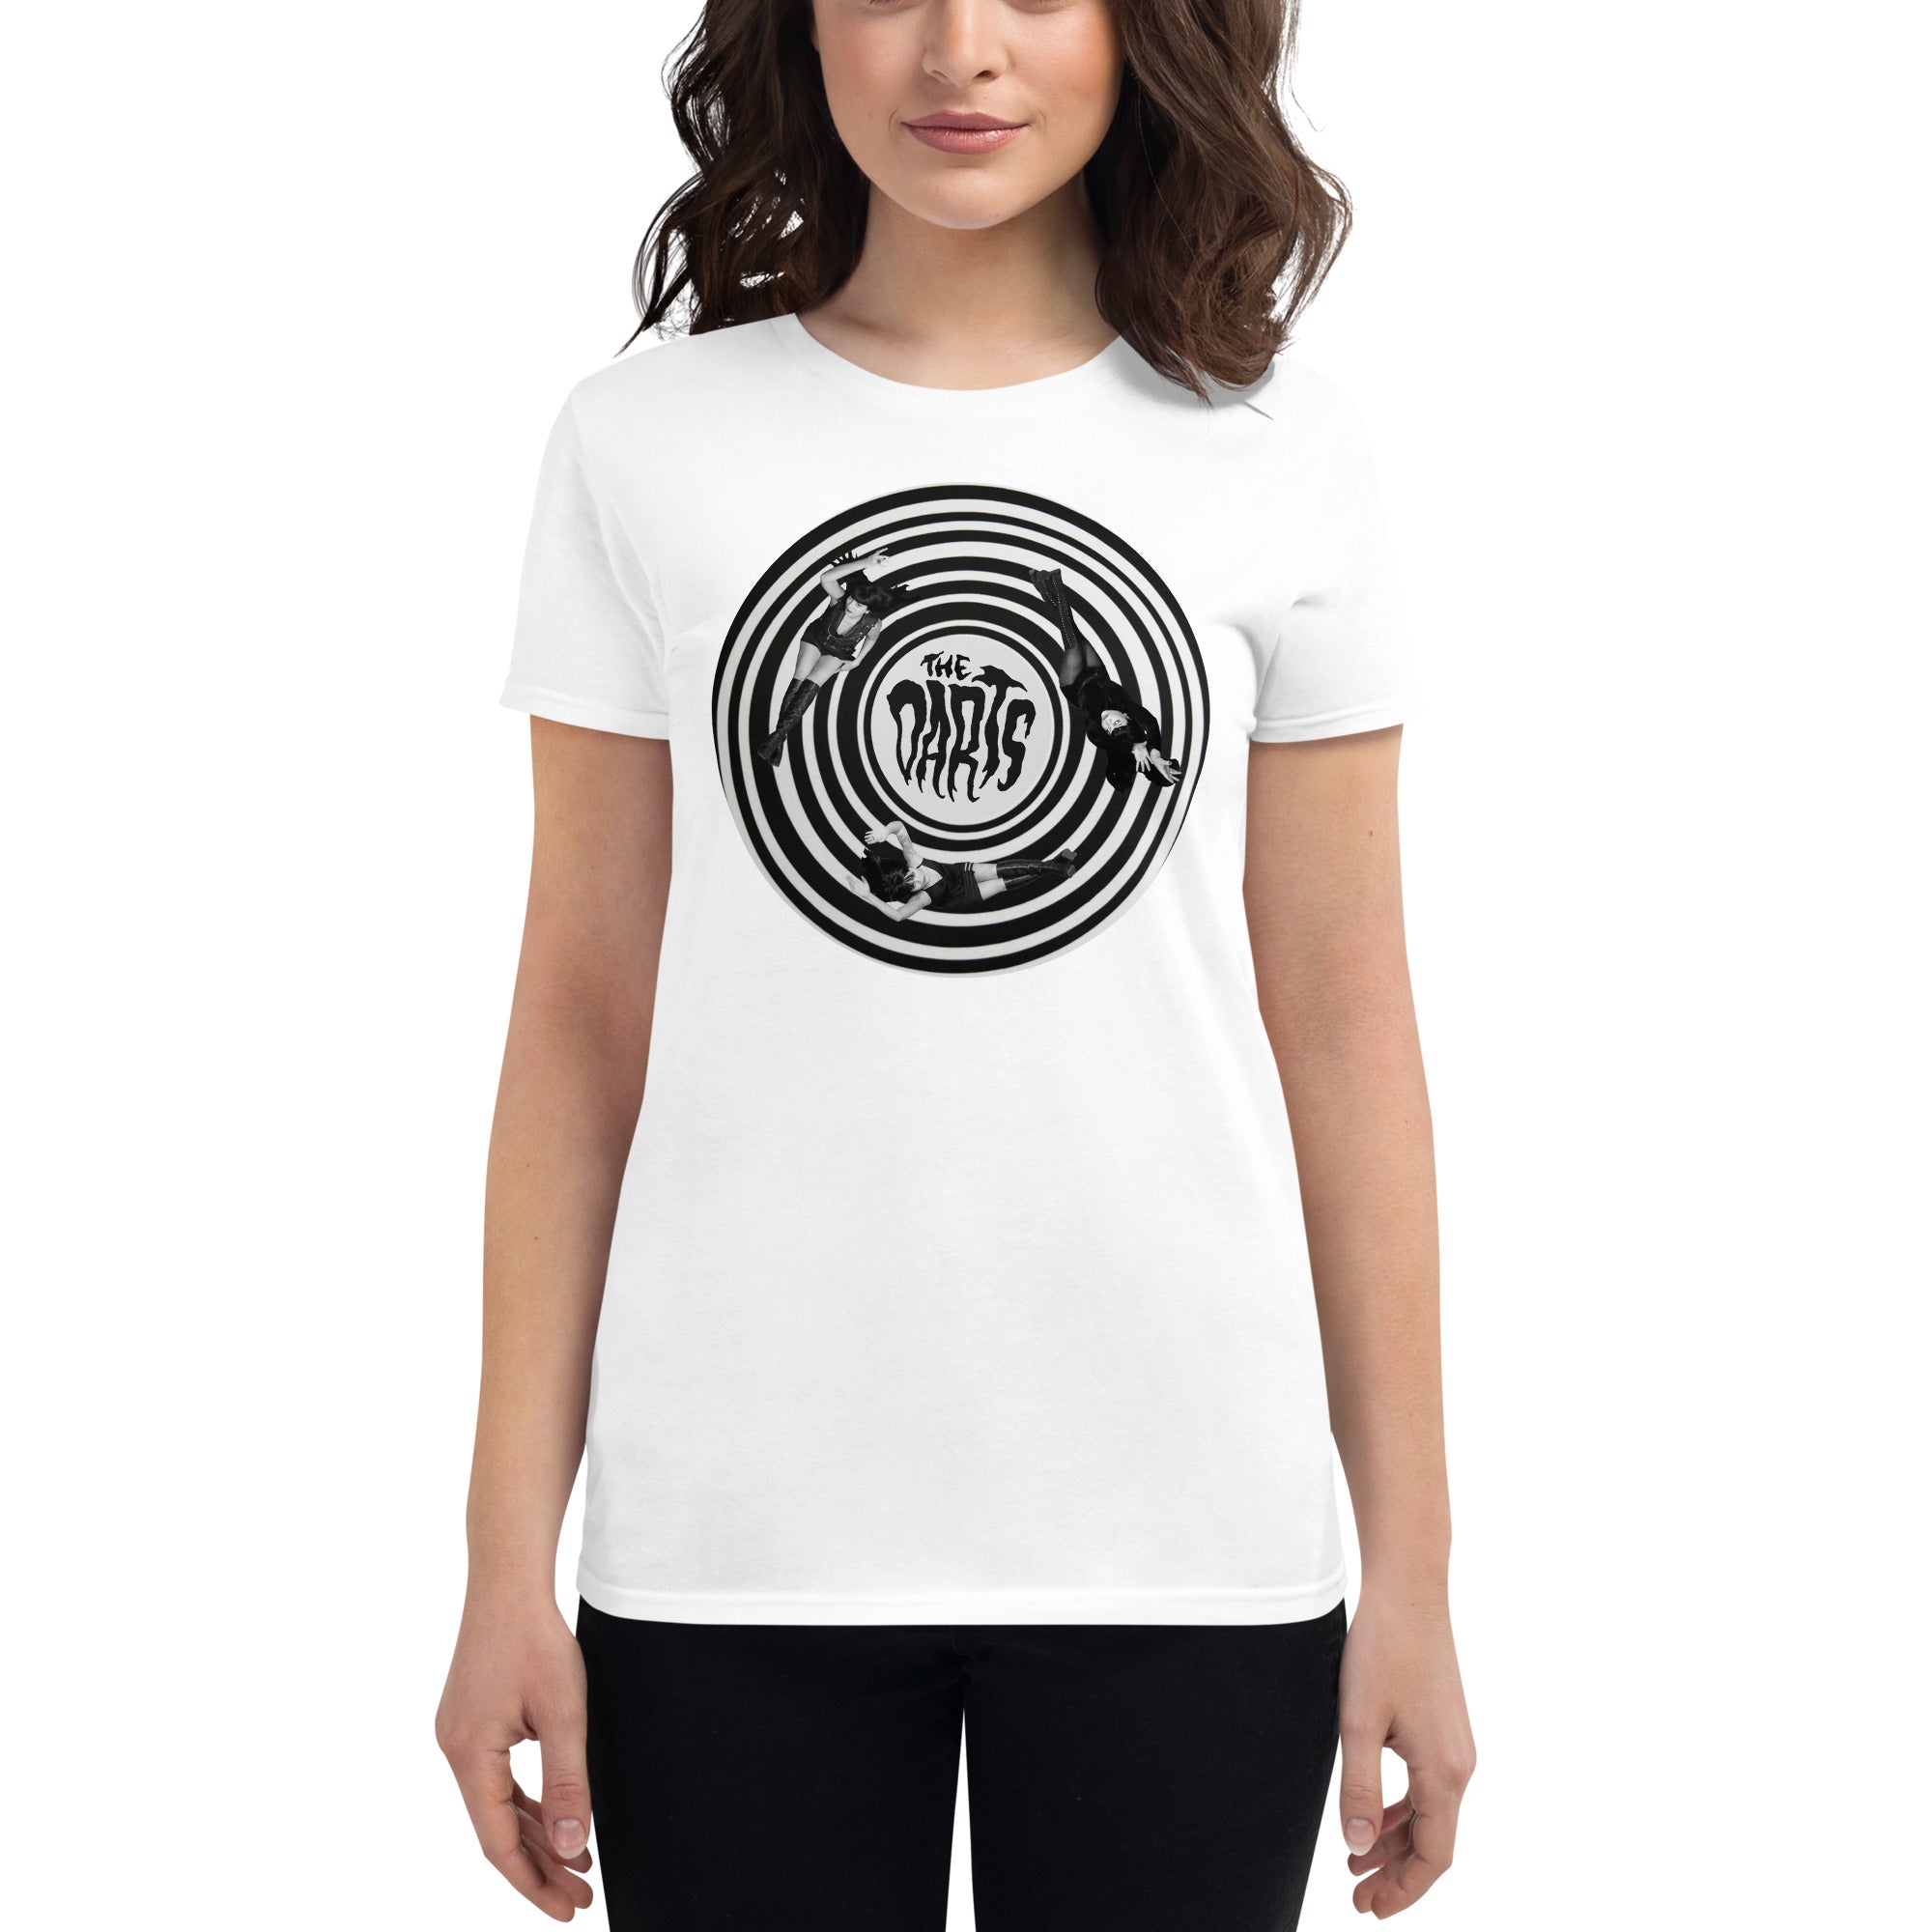 THE DARTS "Spiral" Femme White T-Shirt